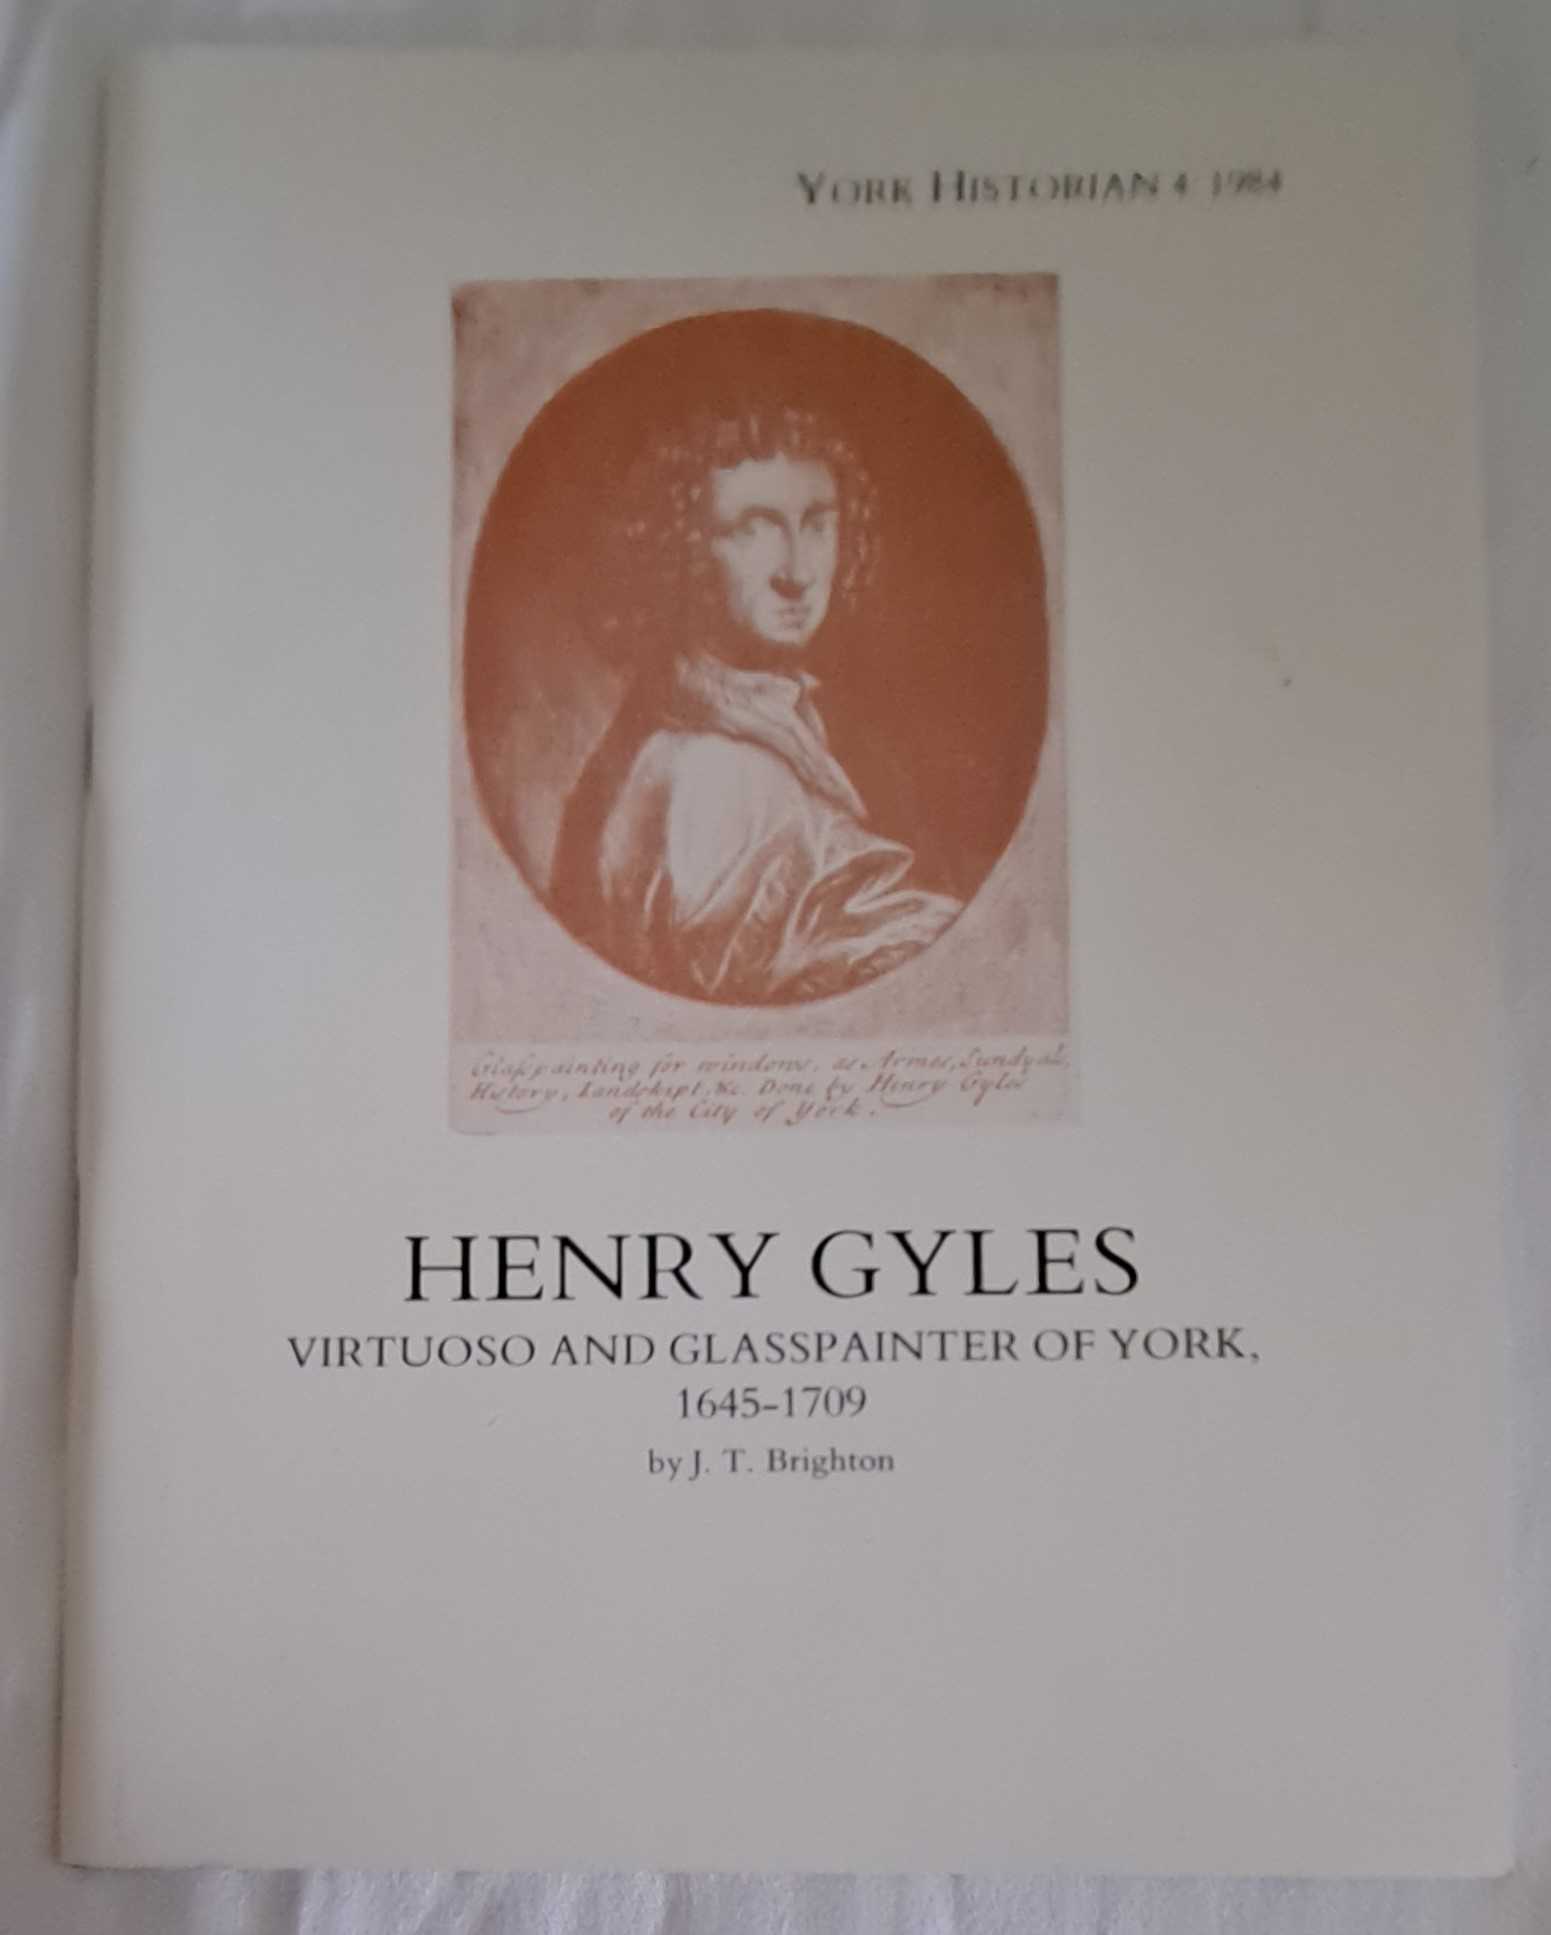 J T Brighton - York Historian Volume 4 1984, Henry Gyles, Virtuoso and Glasspainter of York, 1645-1705